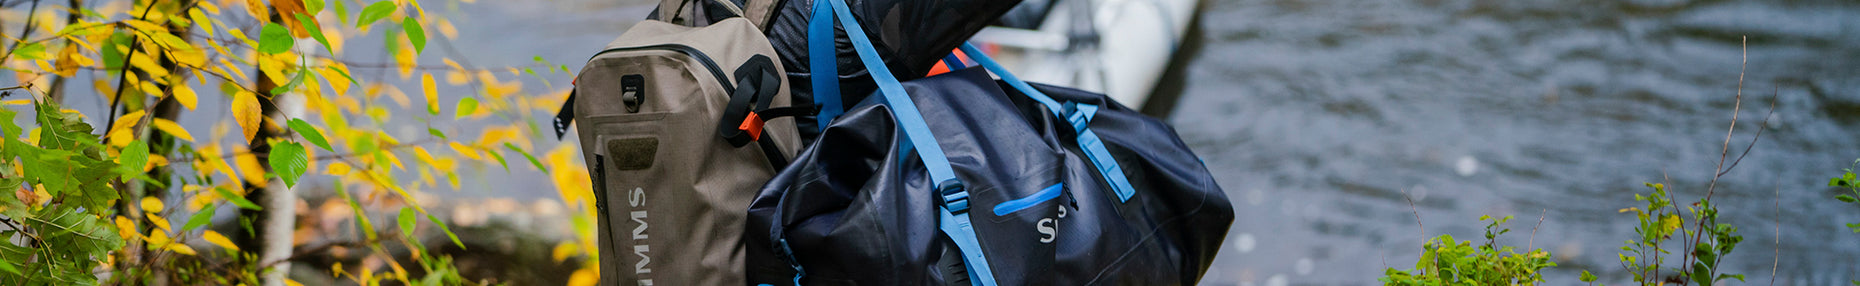 7 Best Waterproof Duffel Bags to Keep Your Gear Dry  Territory Supply